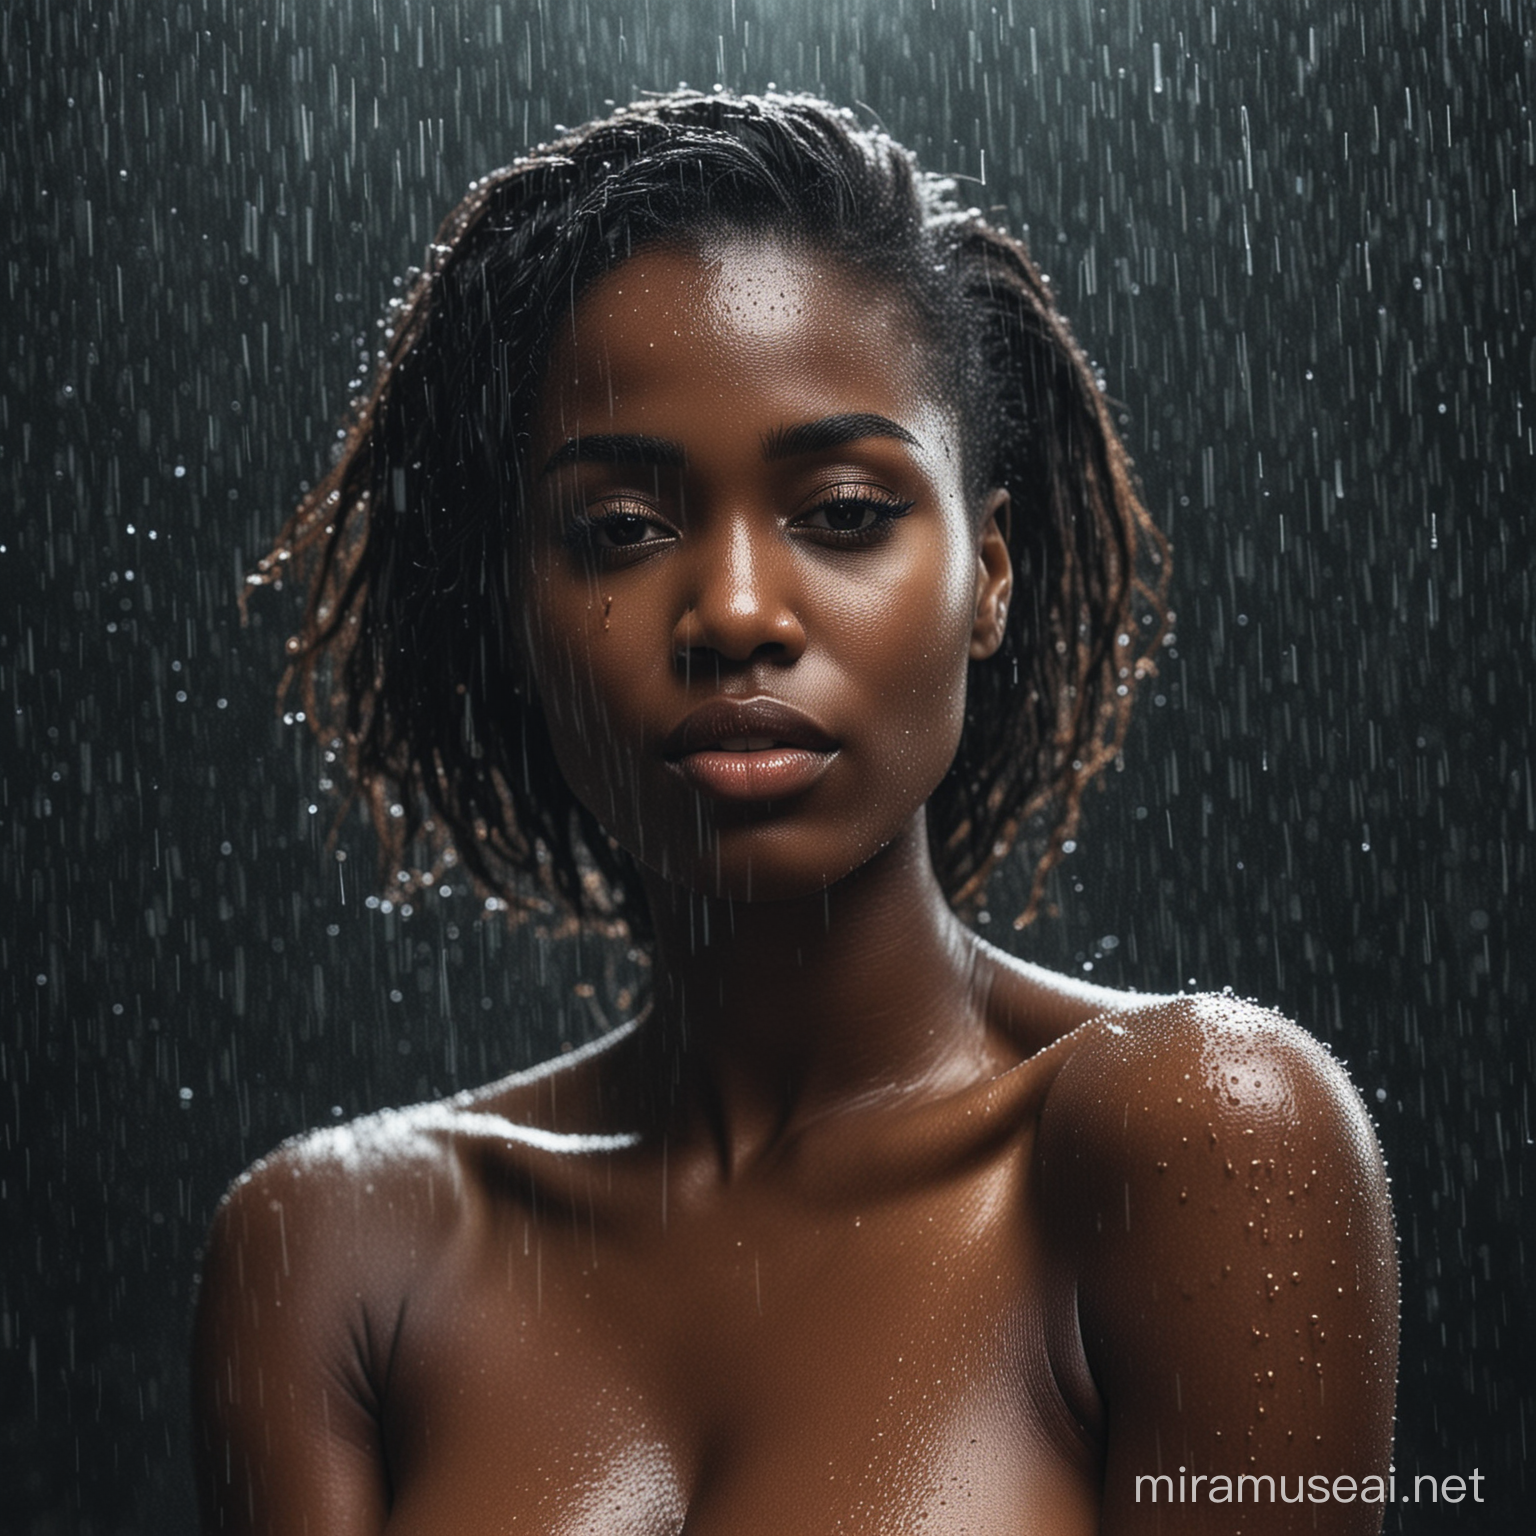 SENSUAL MELANIN WOMAN IN THE DARK RAIN

